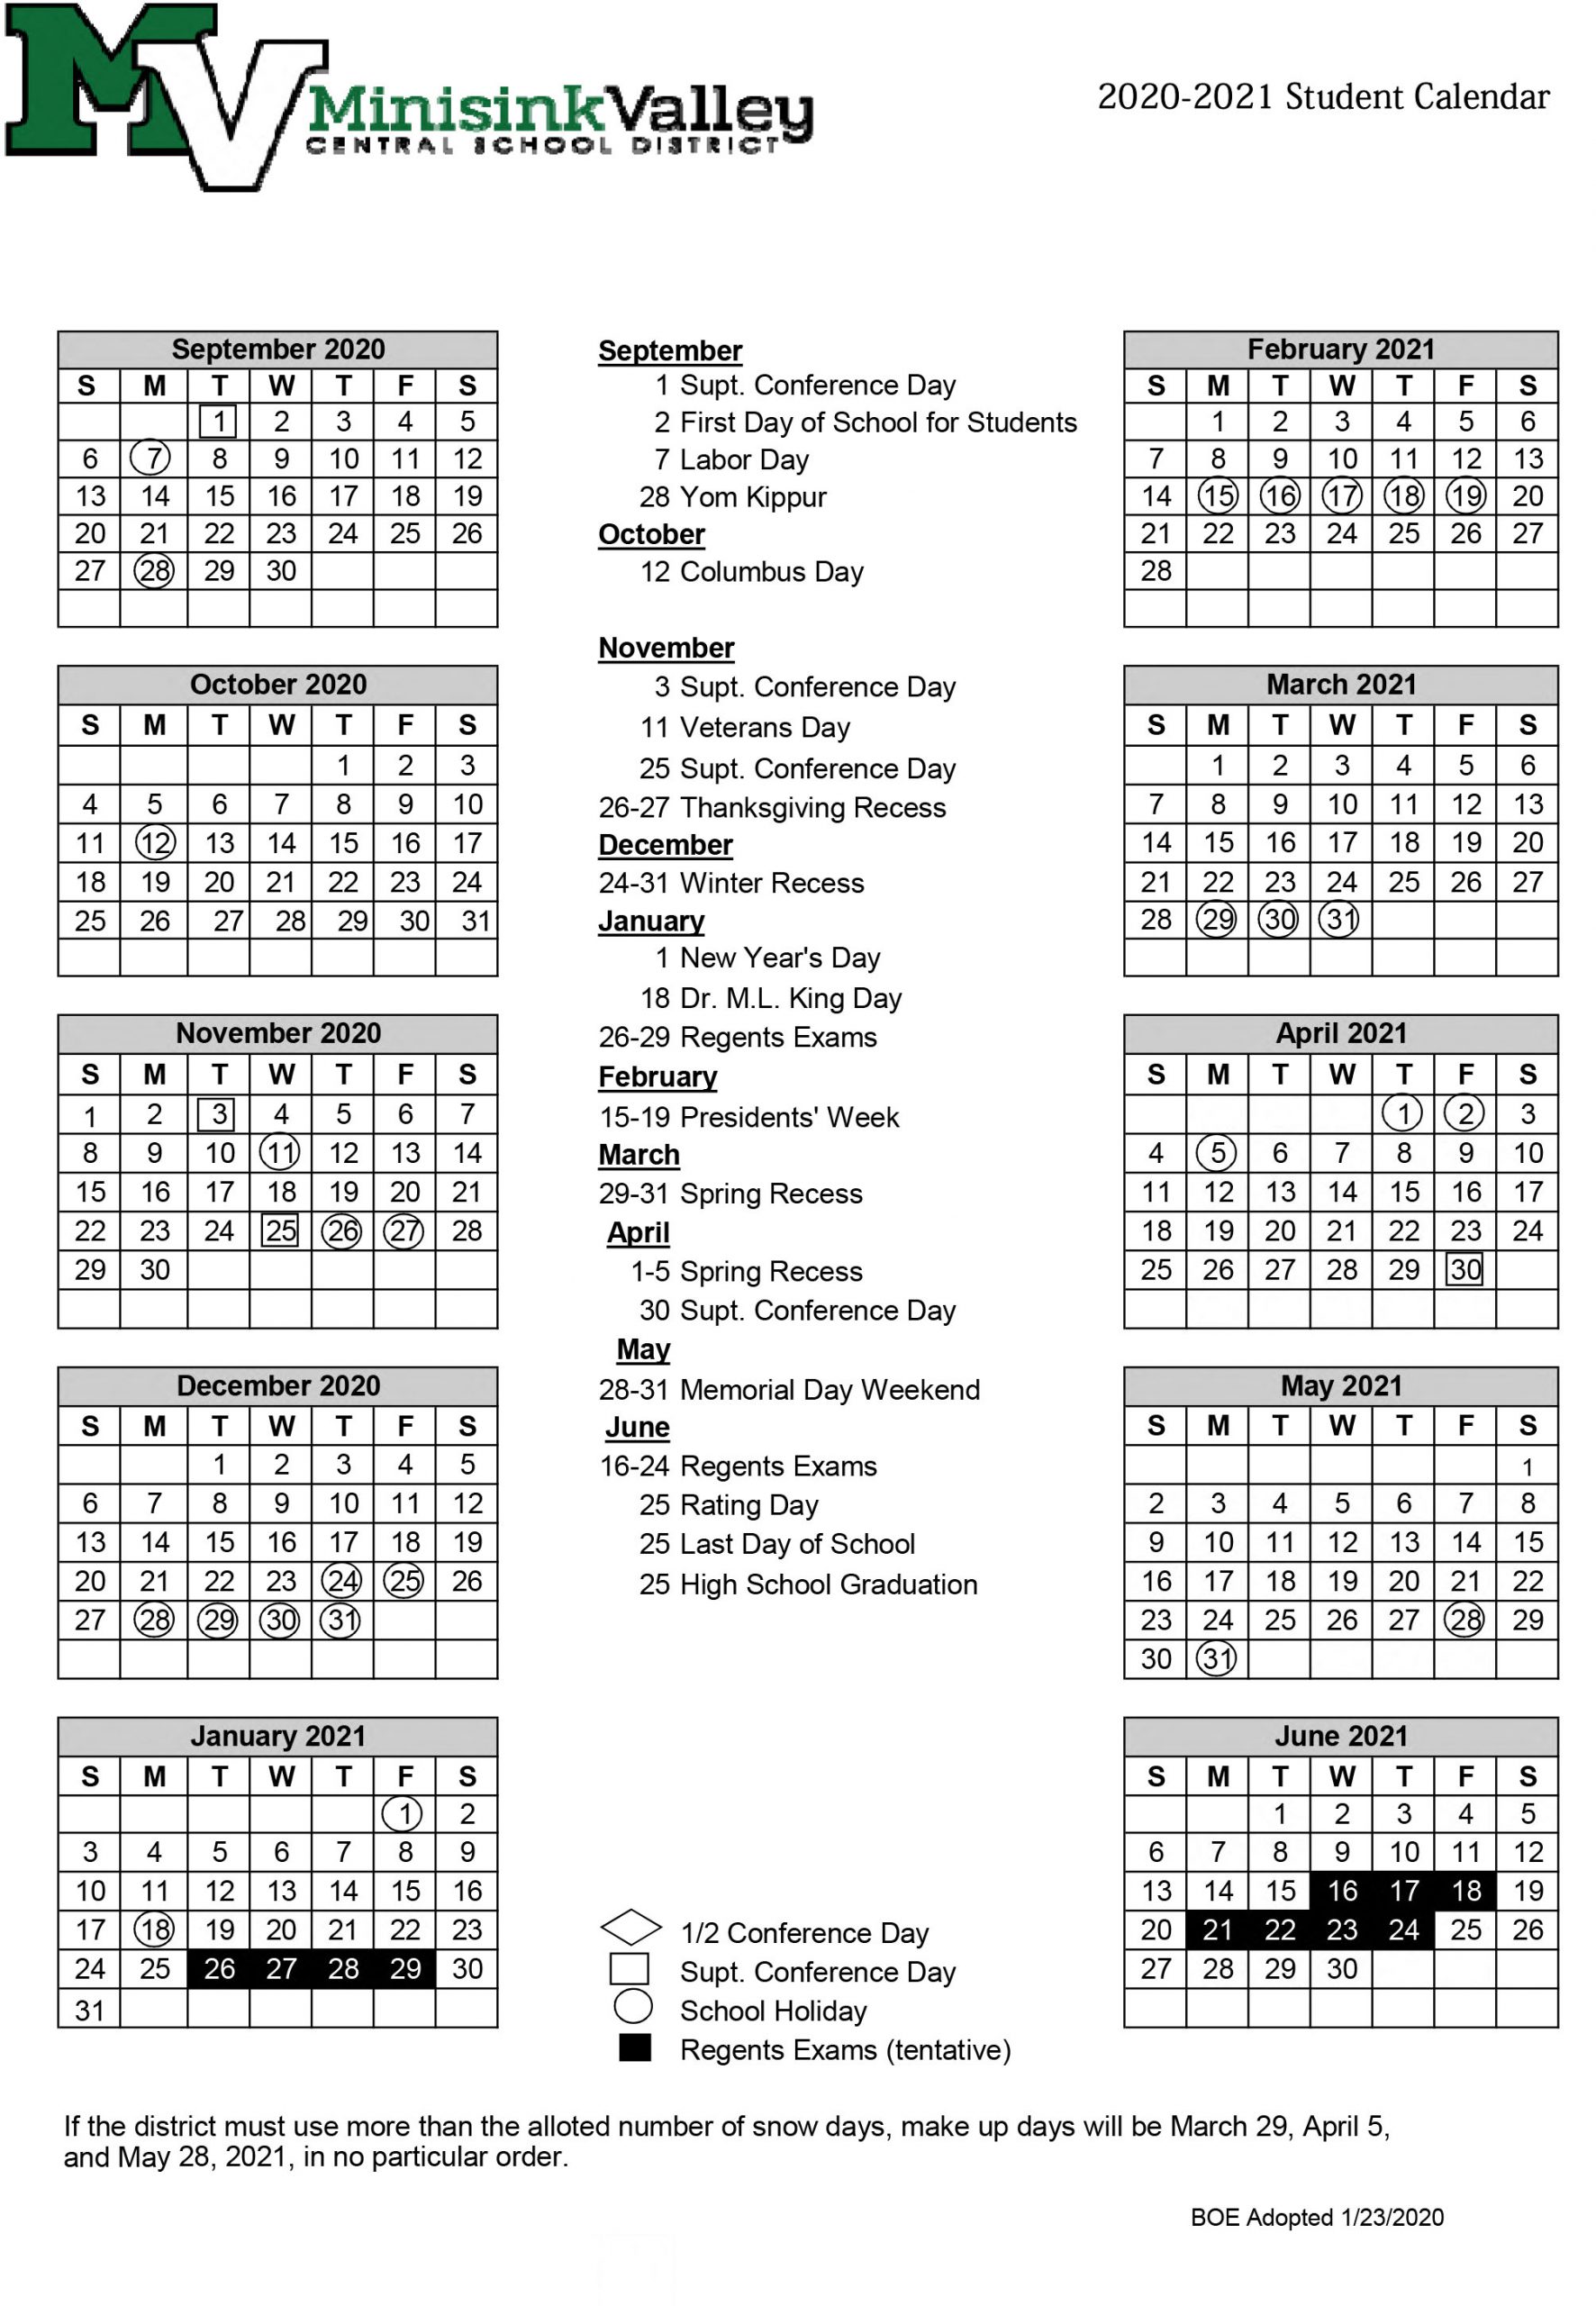 Board of Education adopts 202021 school district calendar Minisink